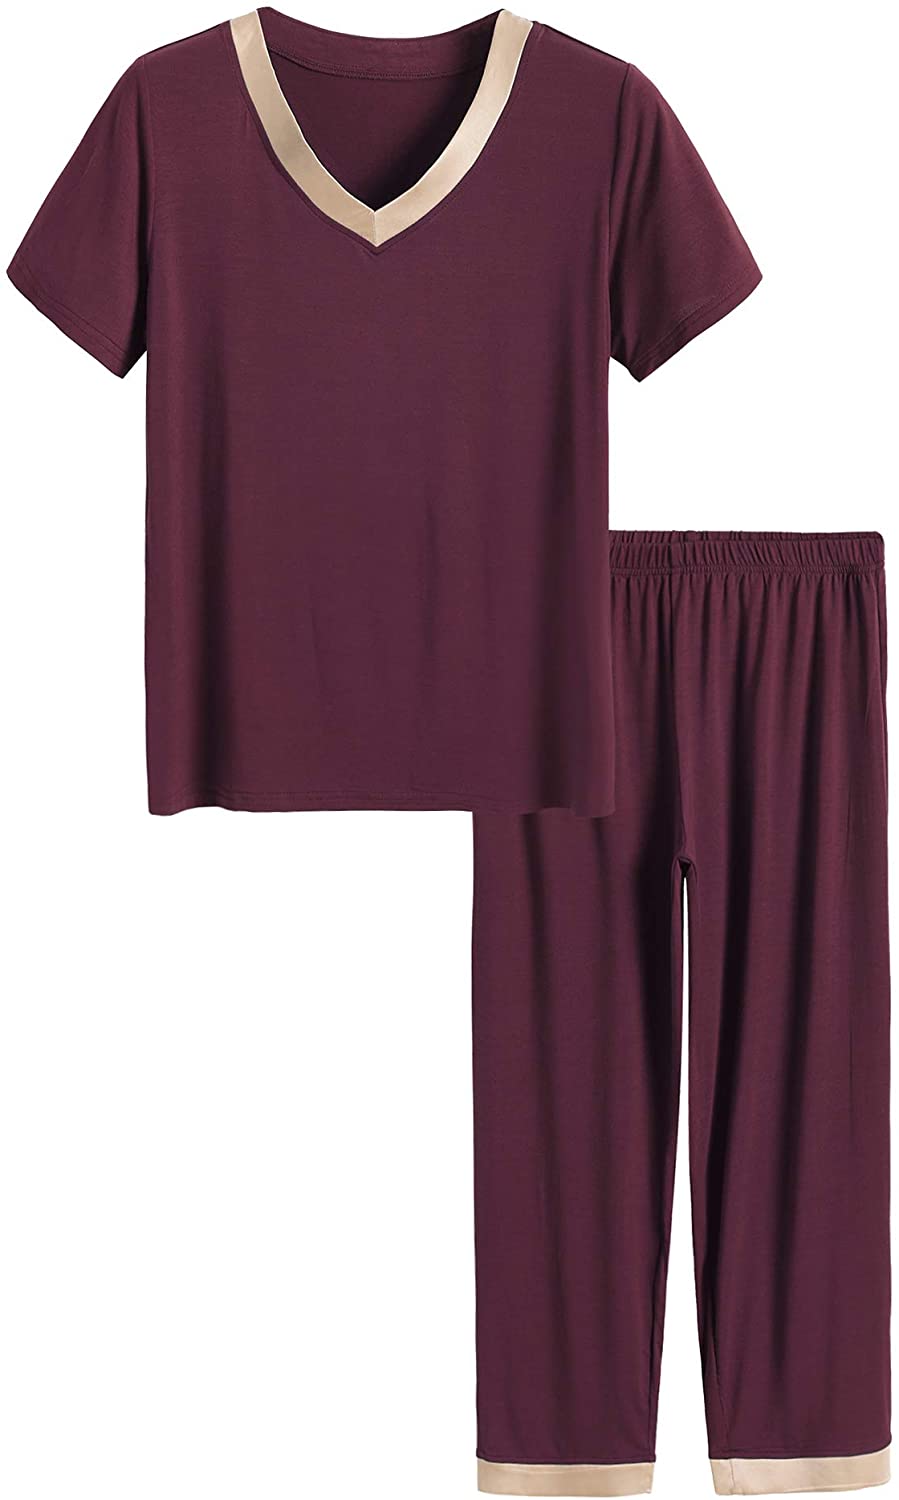 Latuza Women's V-neck Sleepwear Short Sleeves Top with Pants